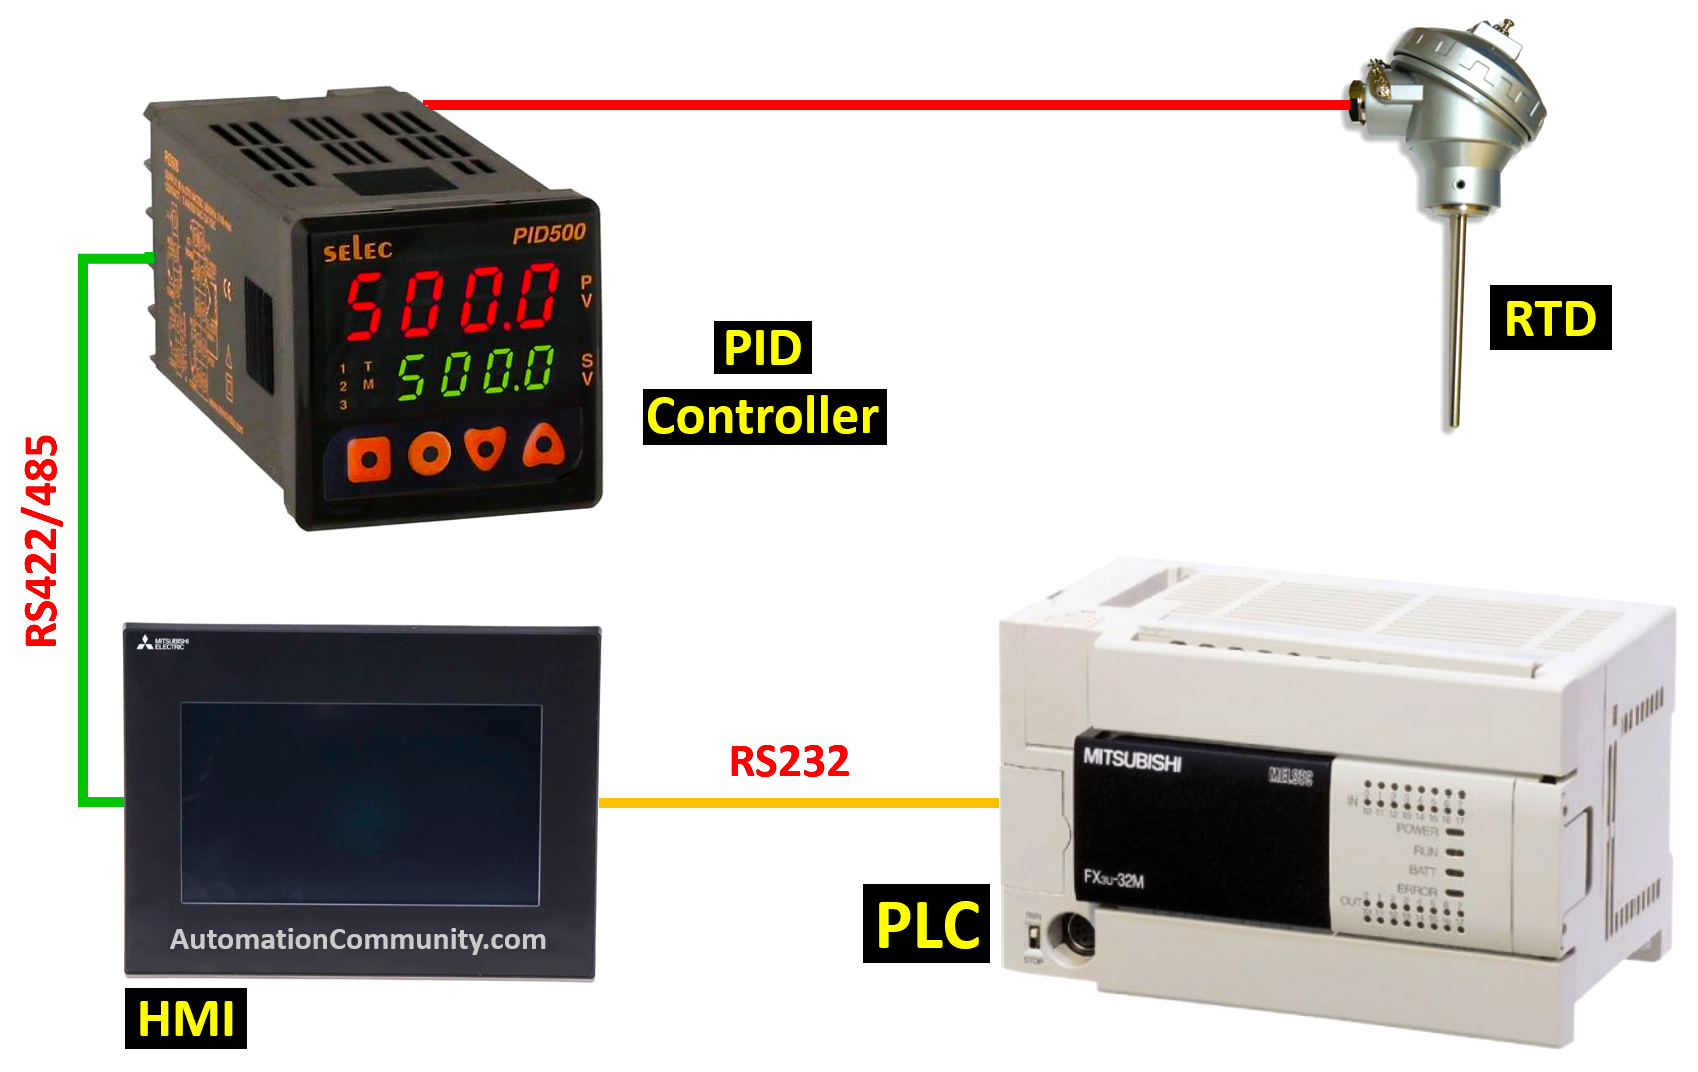 Mitsubishi PLC HMI Configuration with PID Controller Via Modbus